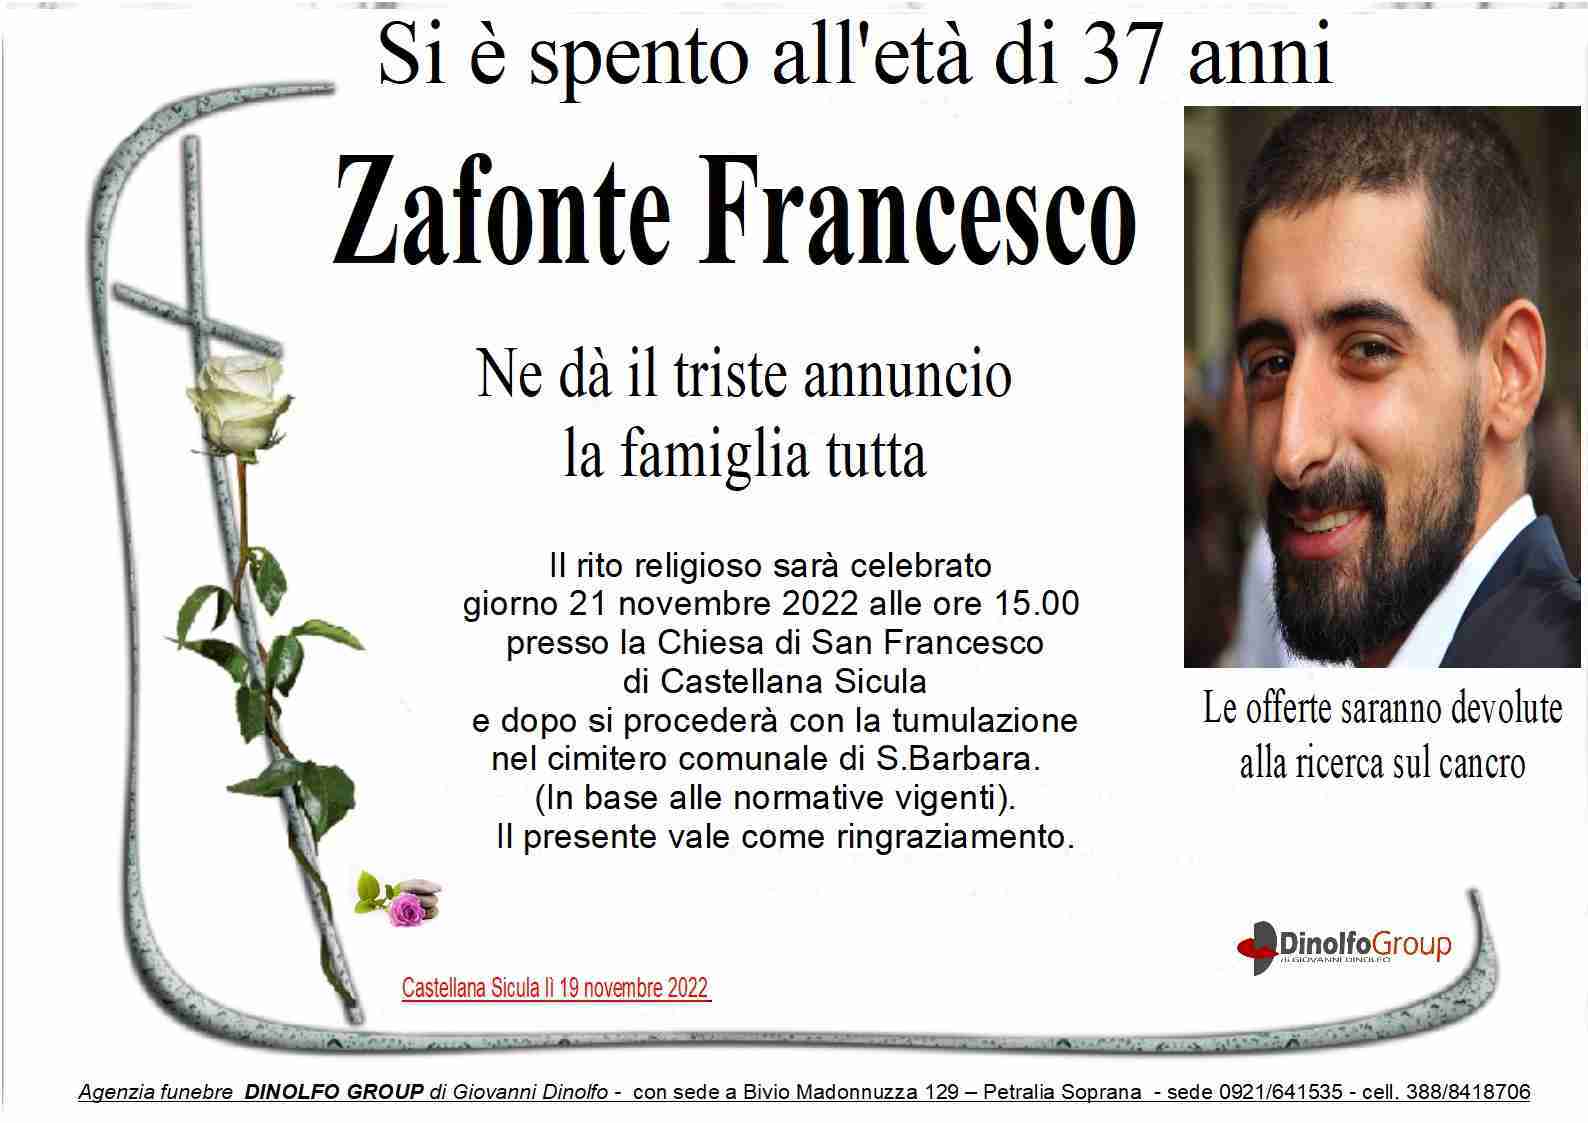 Francesco Zafonte